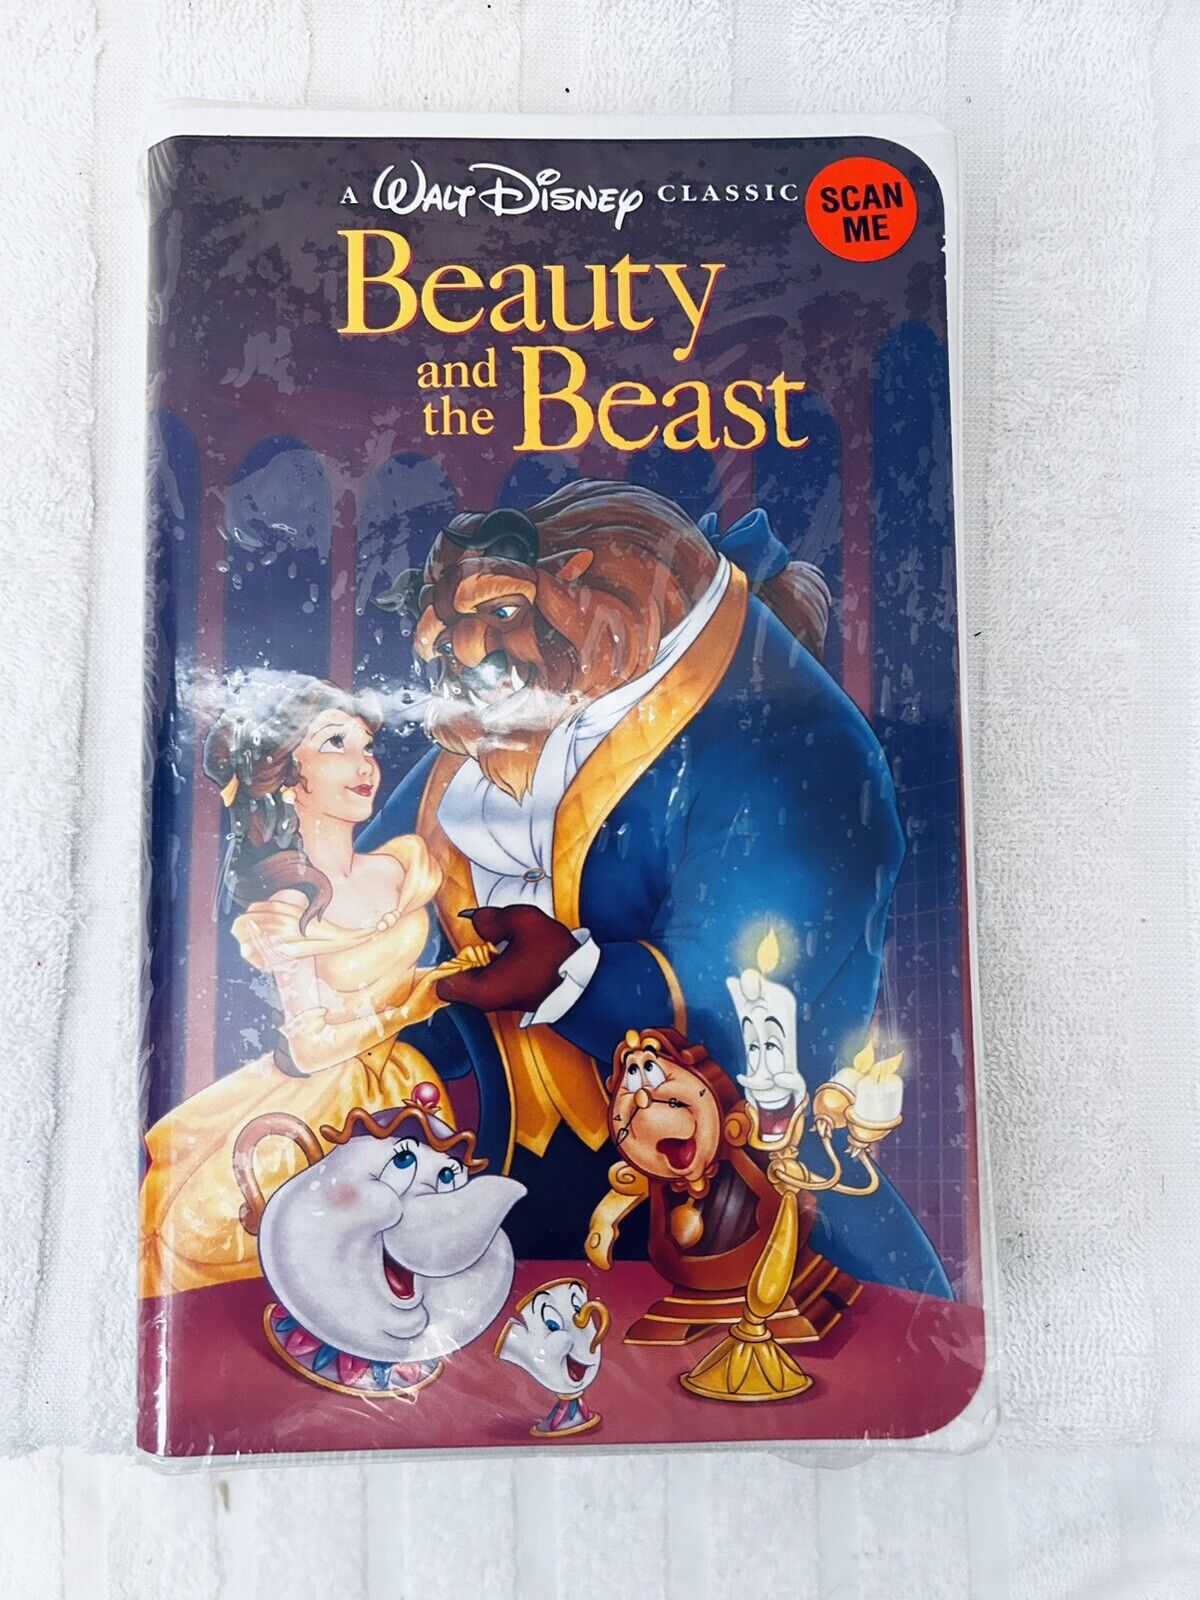 RARE BLACK DIAMOND CLASSIC ECU VHS Disney Beauty and the Beast  #1325 NEW SEALED